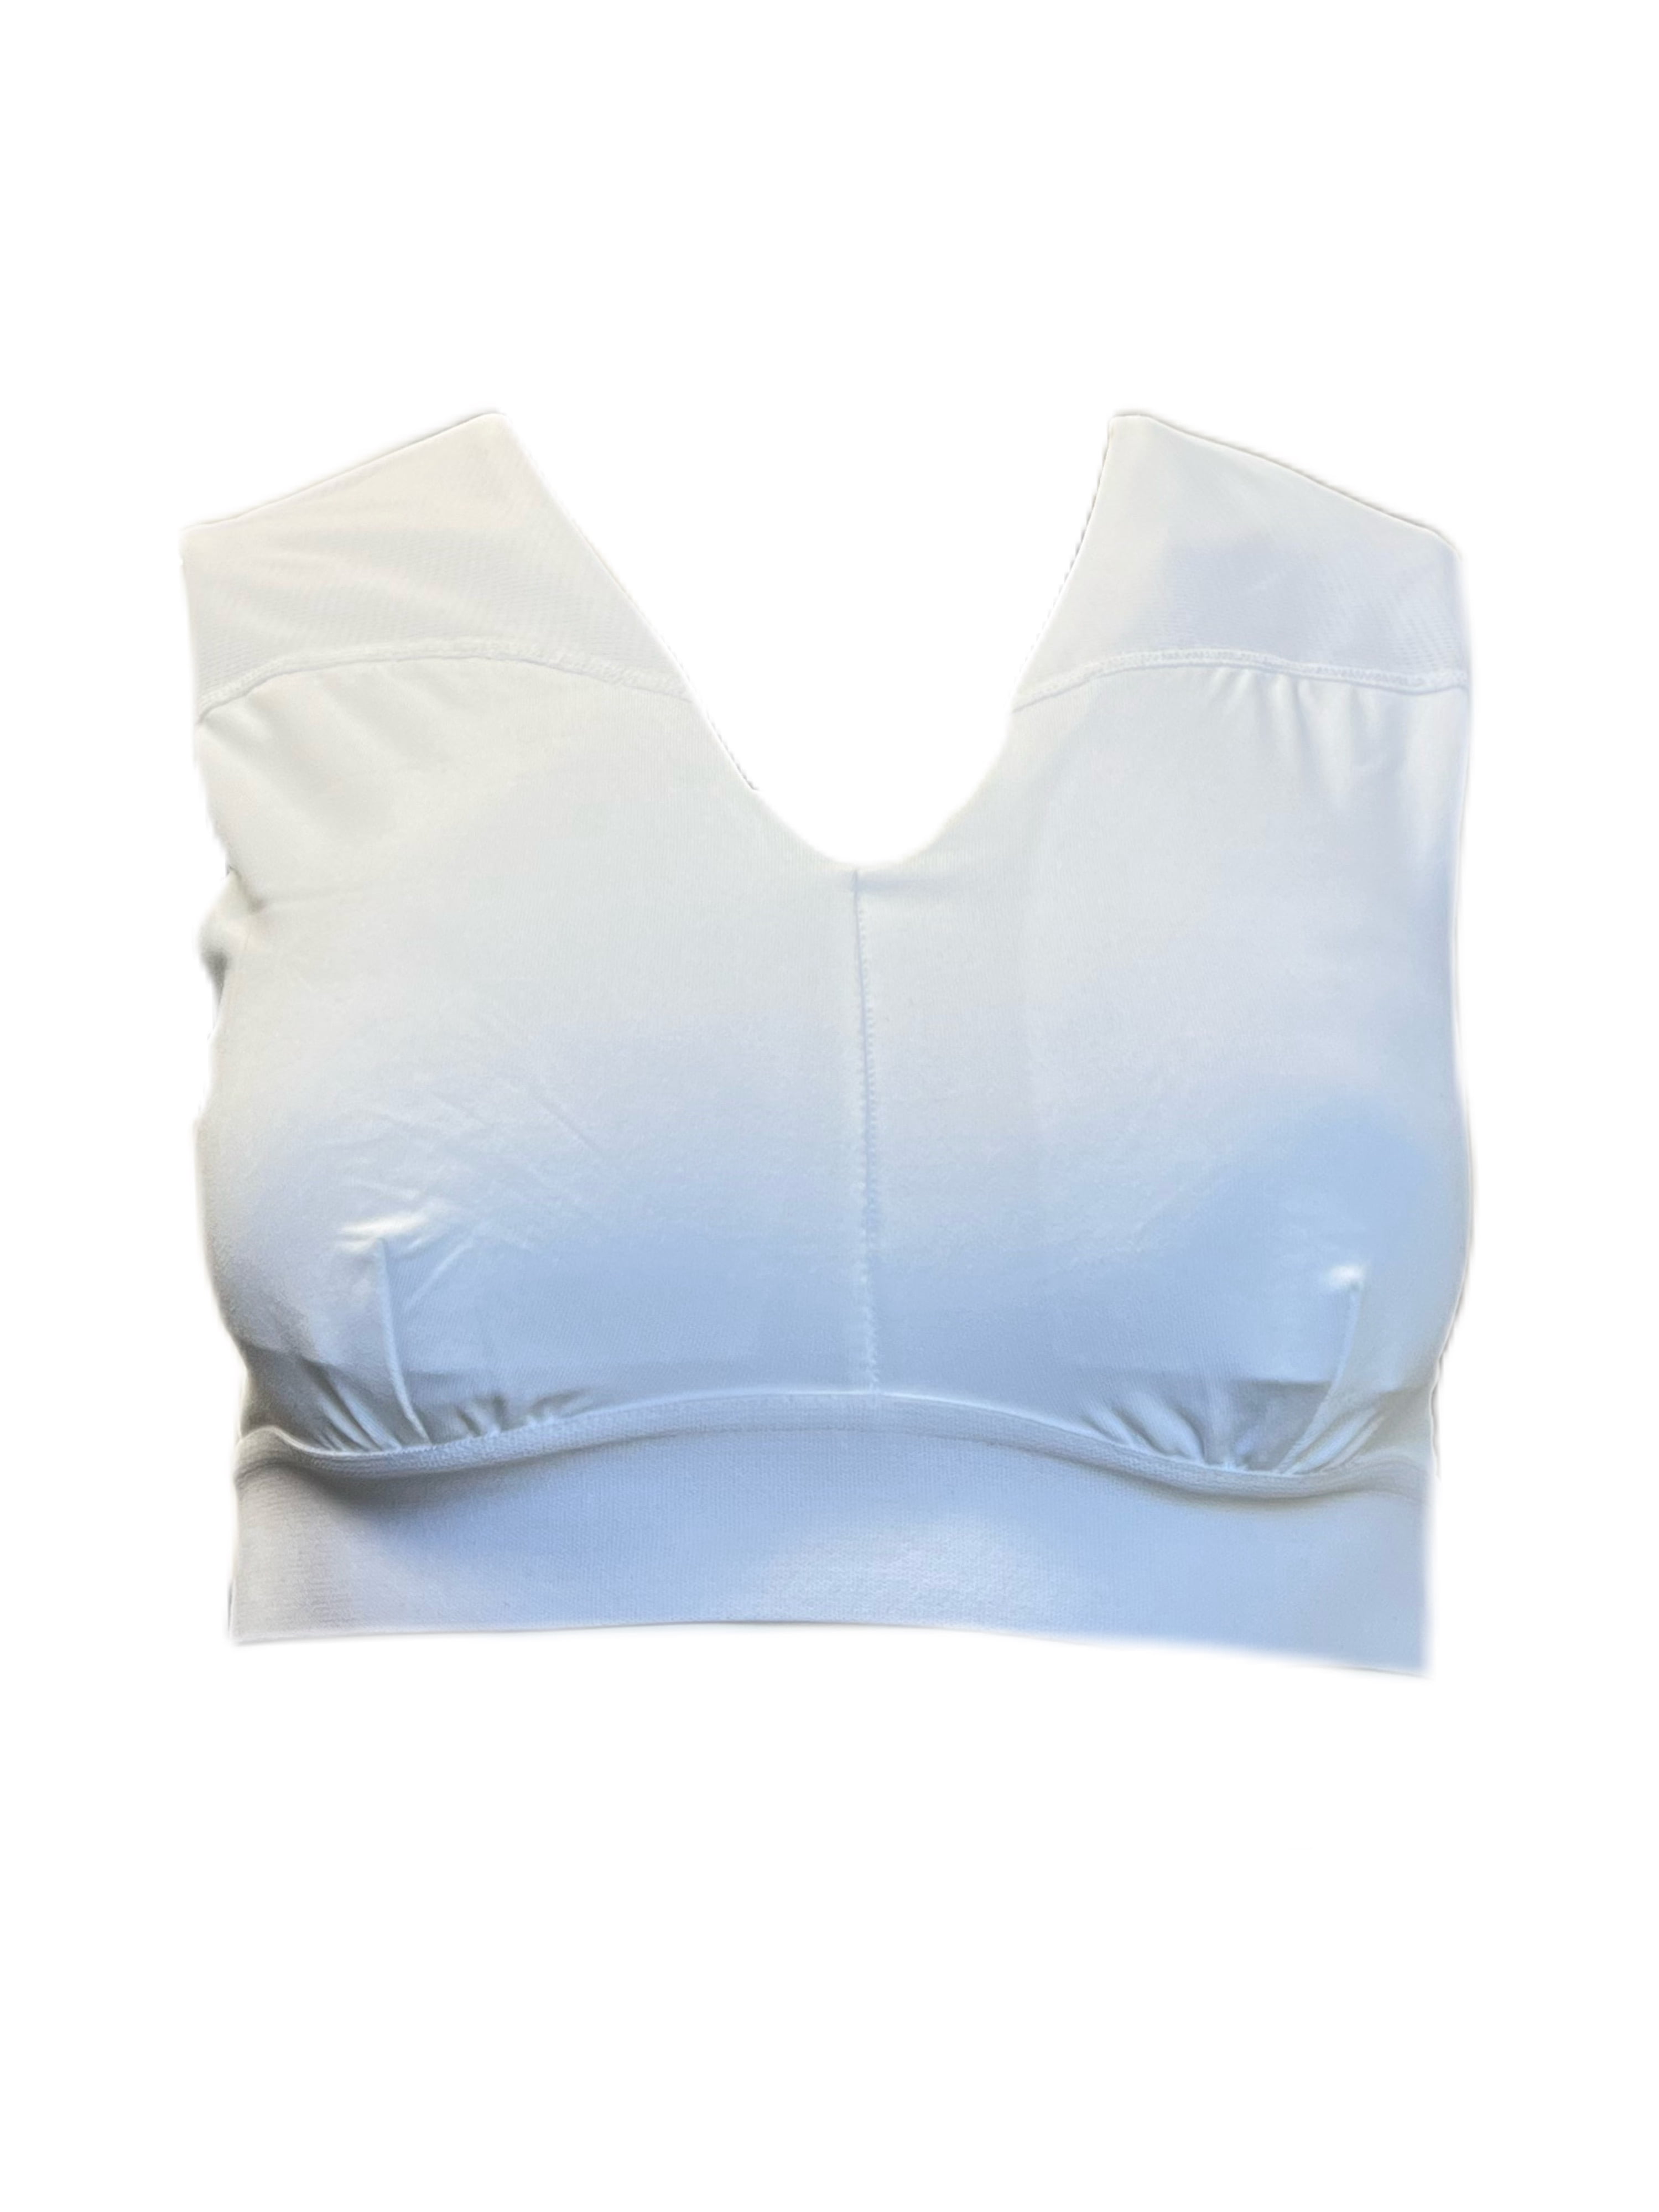 TOMMIE COPPER Womens White Shoulder Support Comfort Bra, Medium 